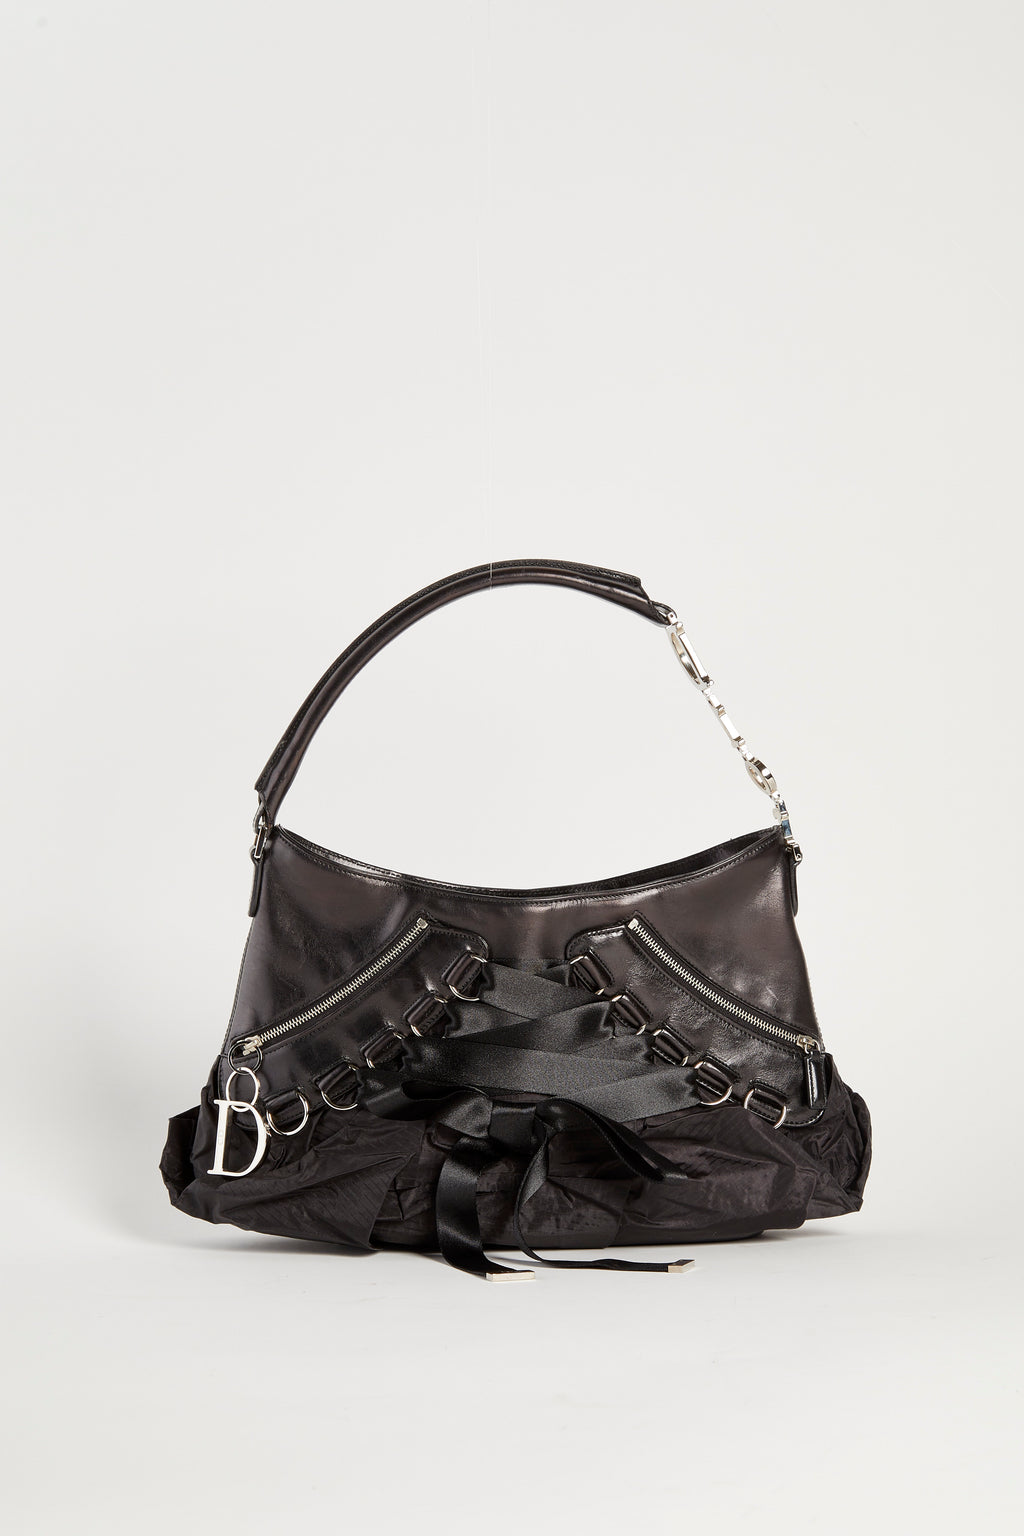 SUPER RARE Christian Dior Galliano Black Leather Ballerina Shoulder Bag